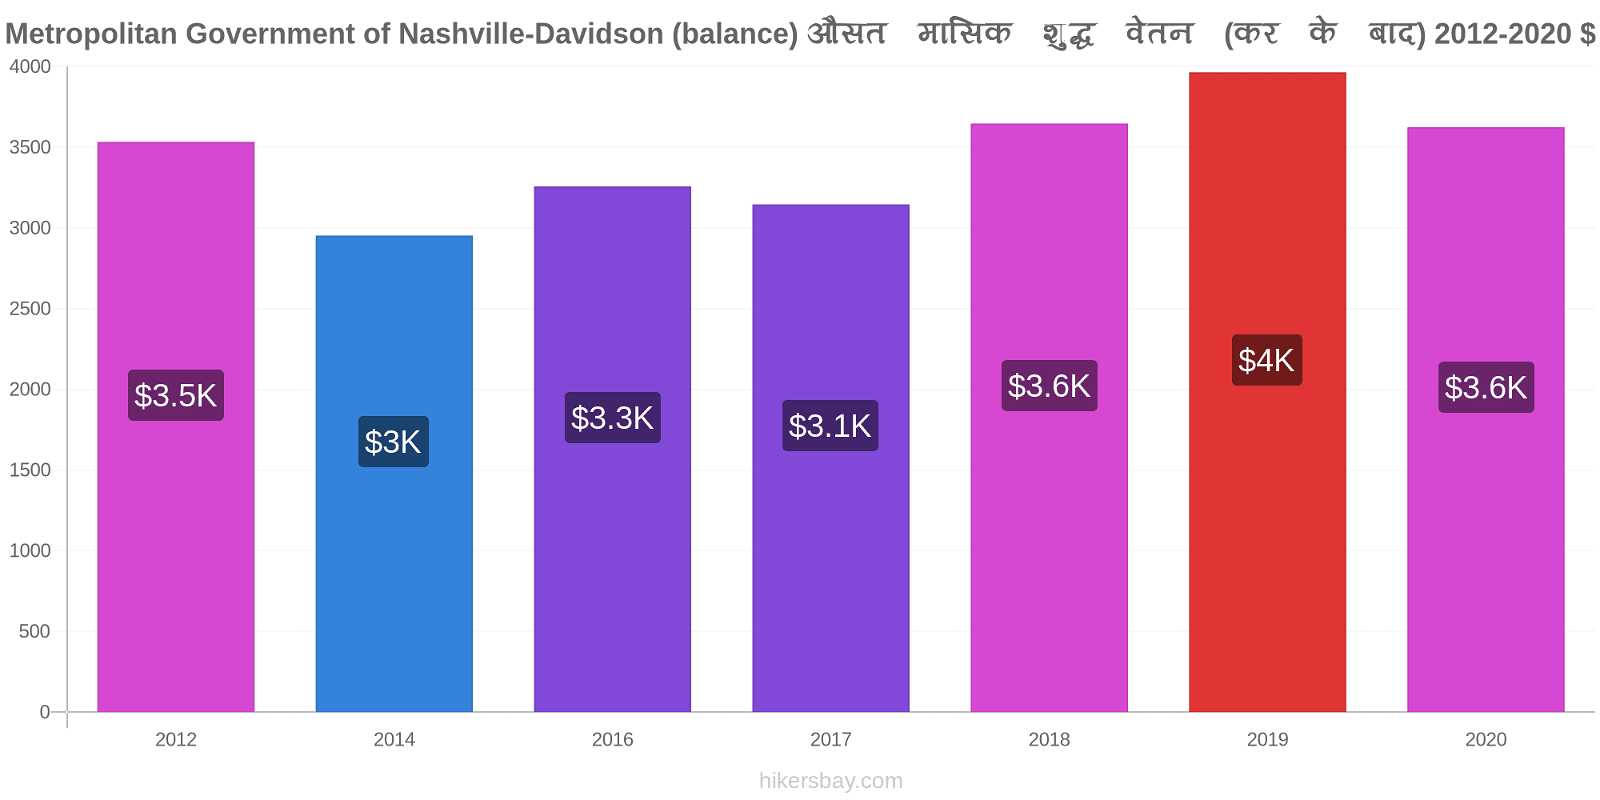 Metropolitan Government of Nashville-Davidson (balance) मूल्य परिवर्तन औसत मासिक शुद्ध वेतन (कर के बाद) hikersbay.com